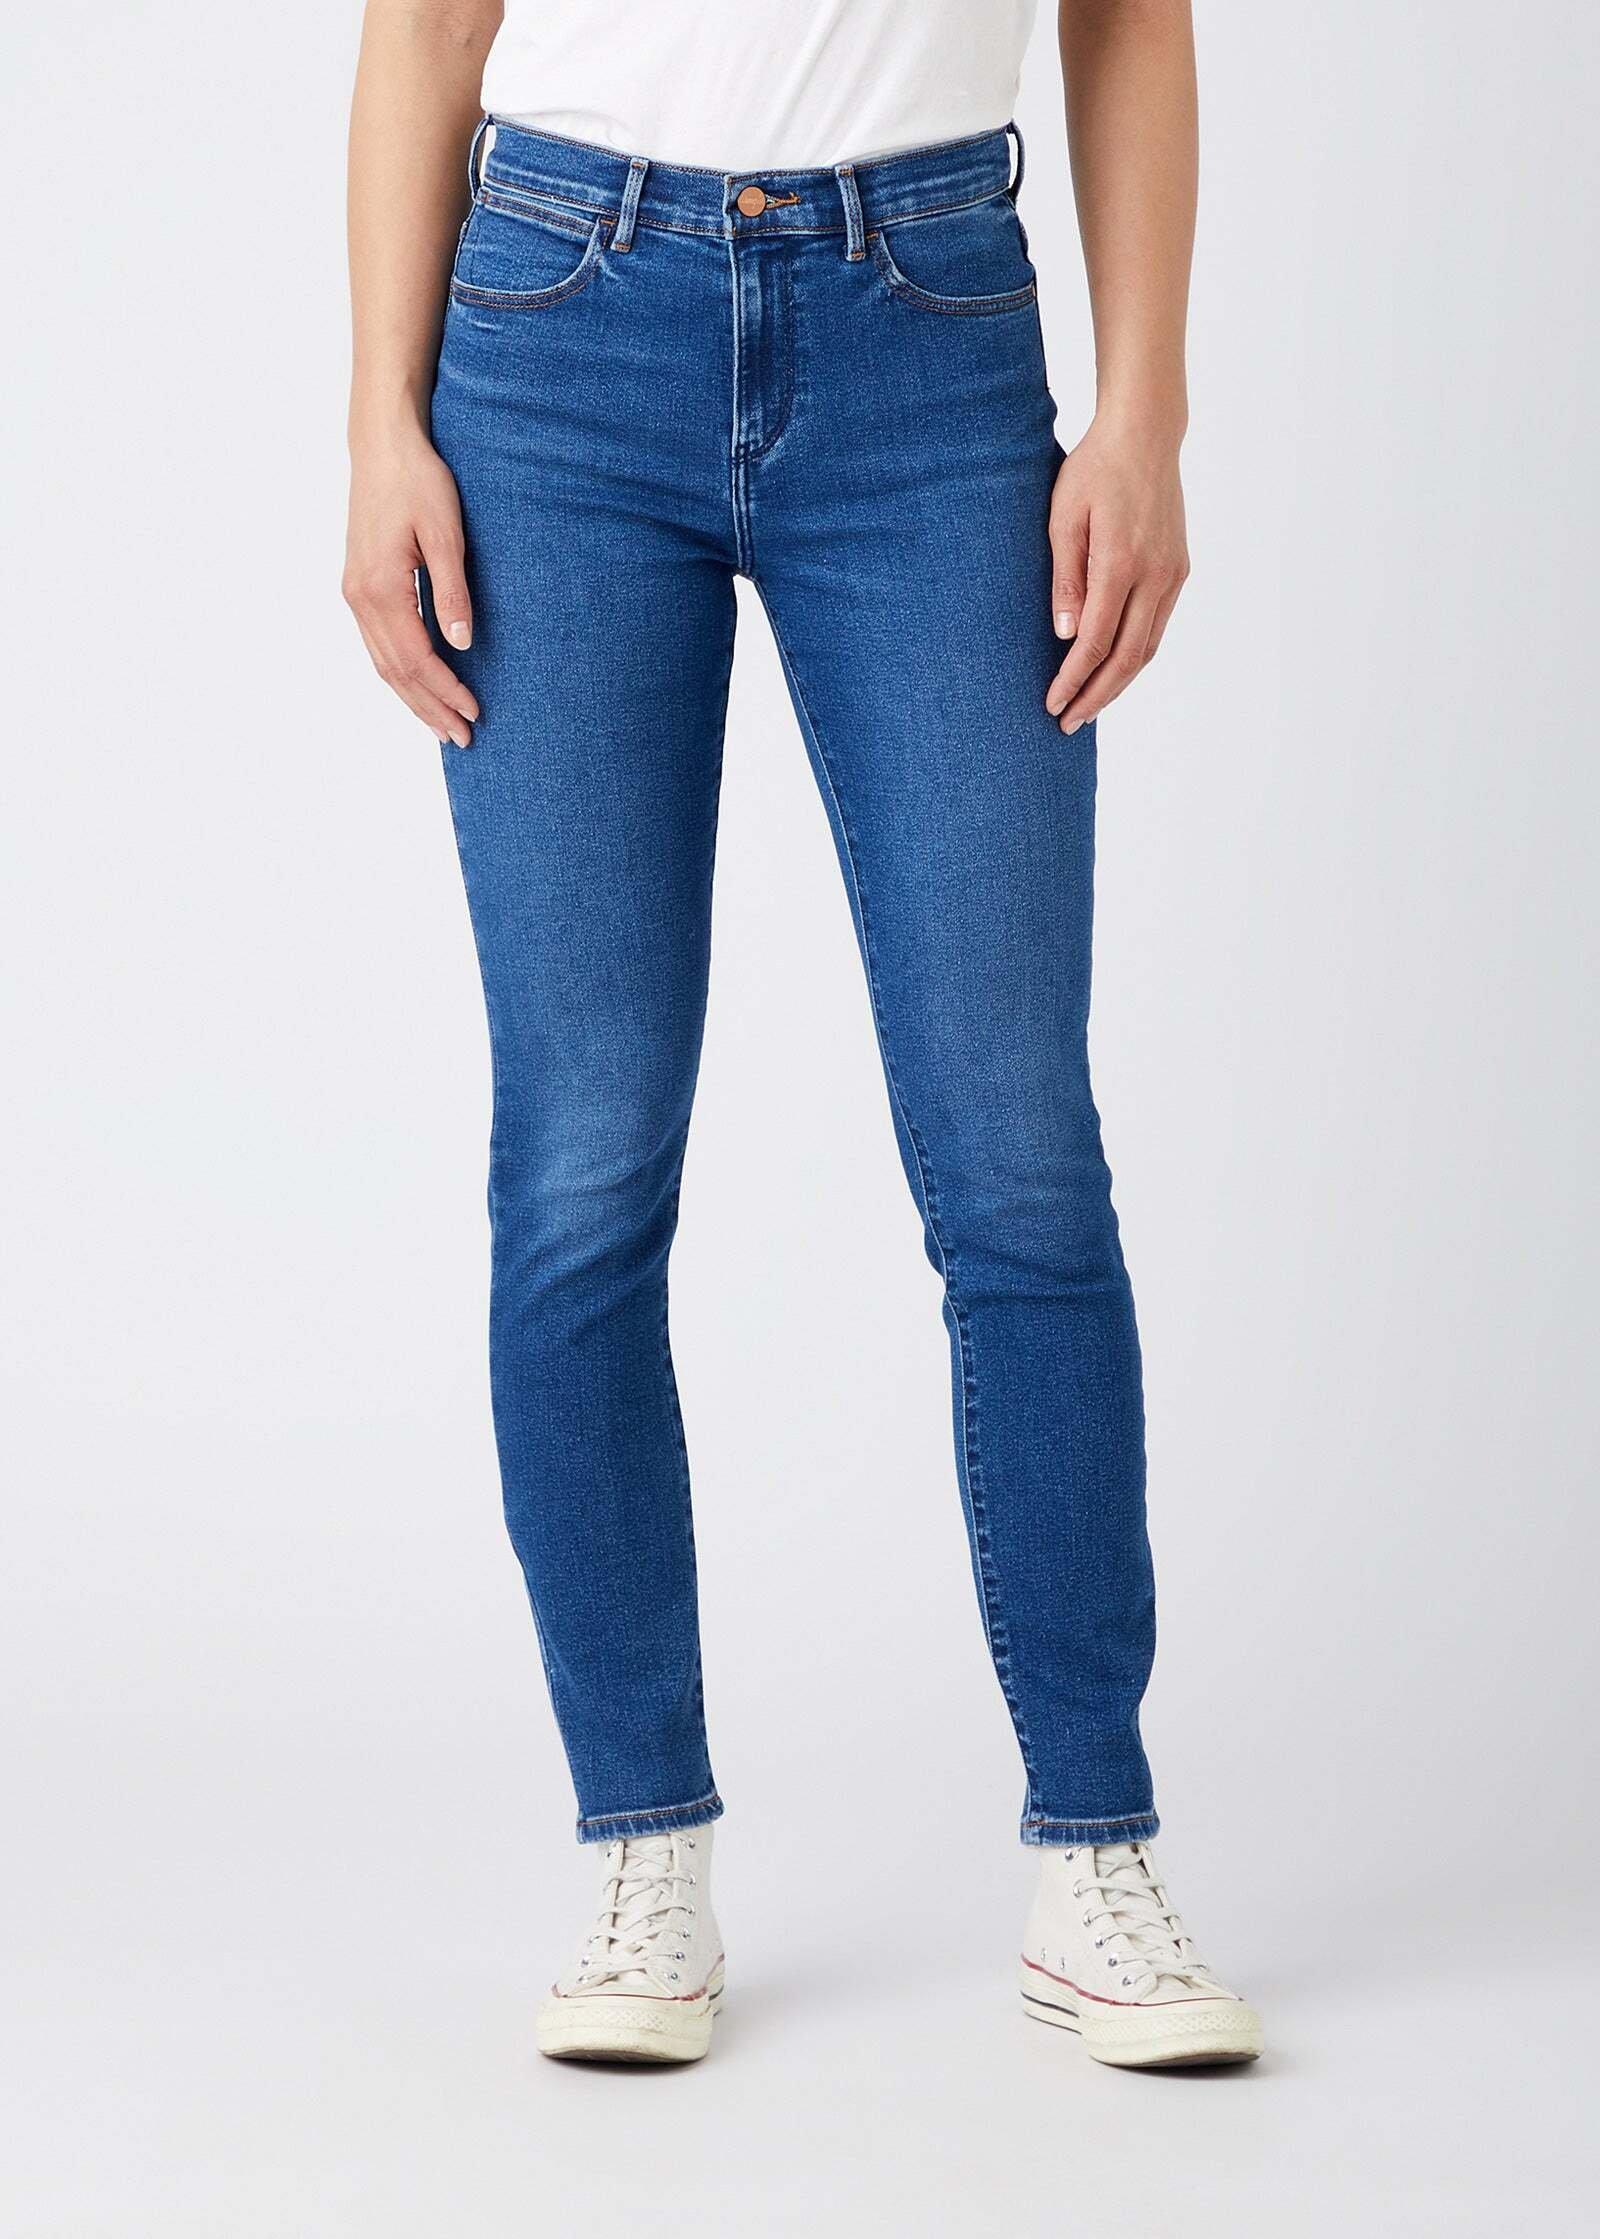 Jeans Skinny Fit High Rise Damen Blau Denim L34/W27 von Wrangler